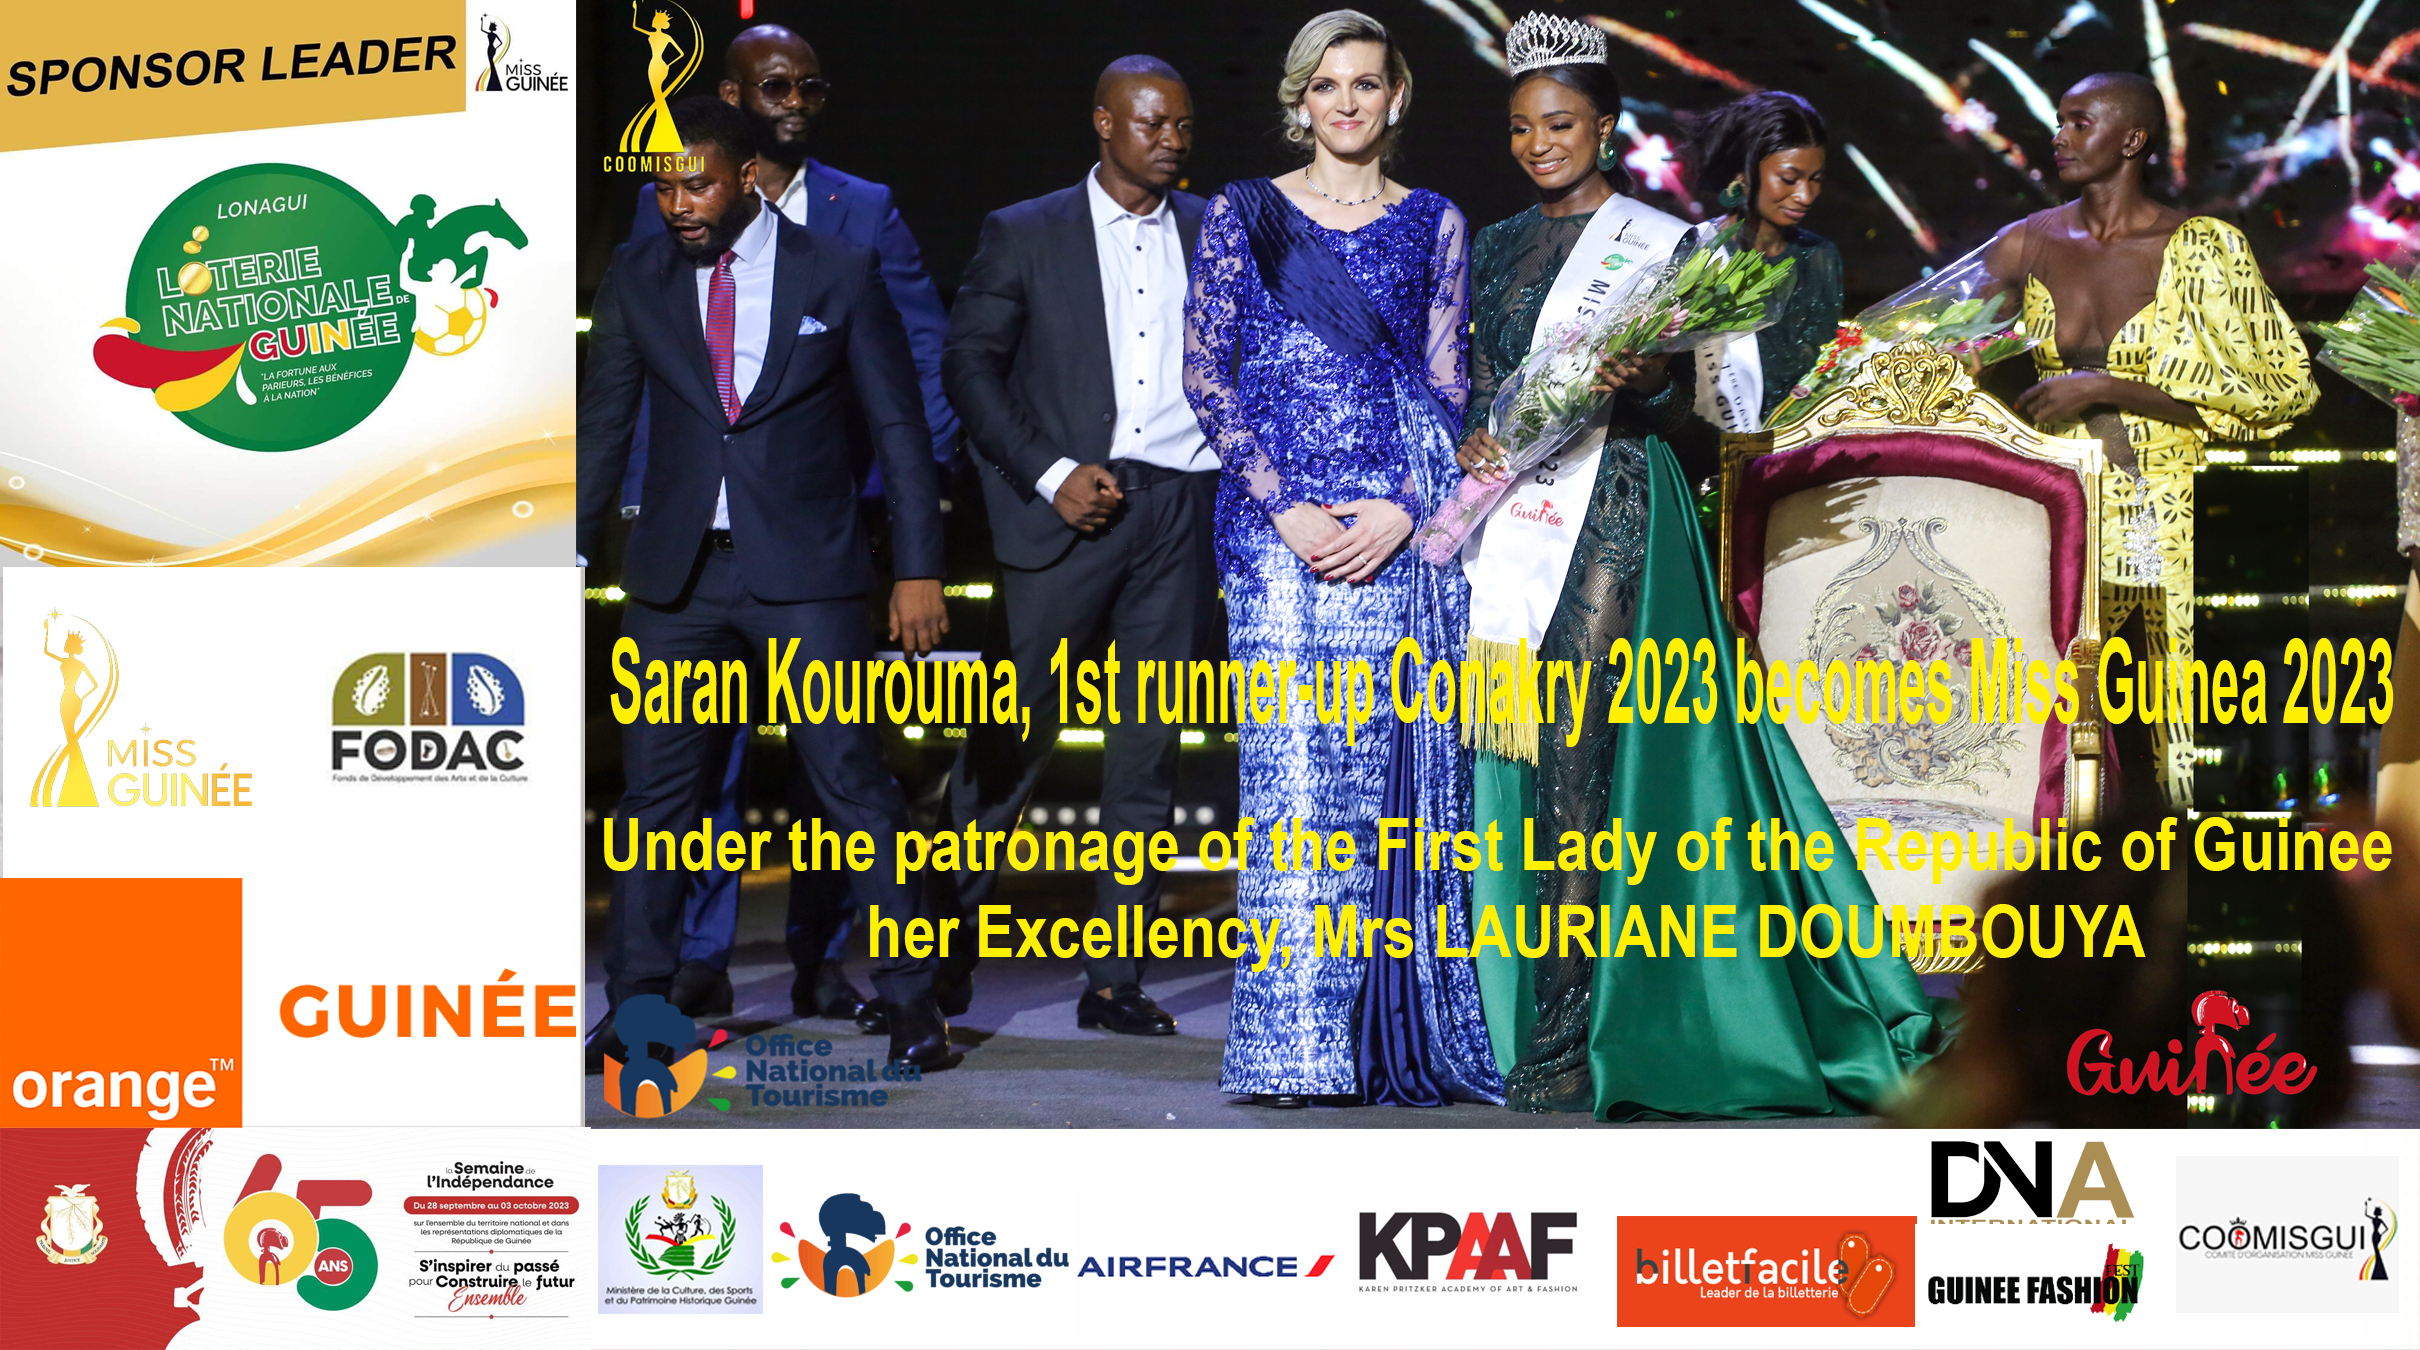 Saran Kourouma, 1st runner-up Conakry 2023 who becomes Miss Guinea 2023, succeeding Mariame Touré, Miss Guinea 2019